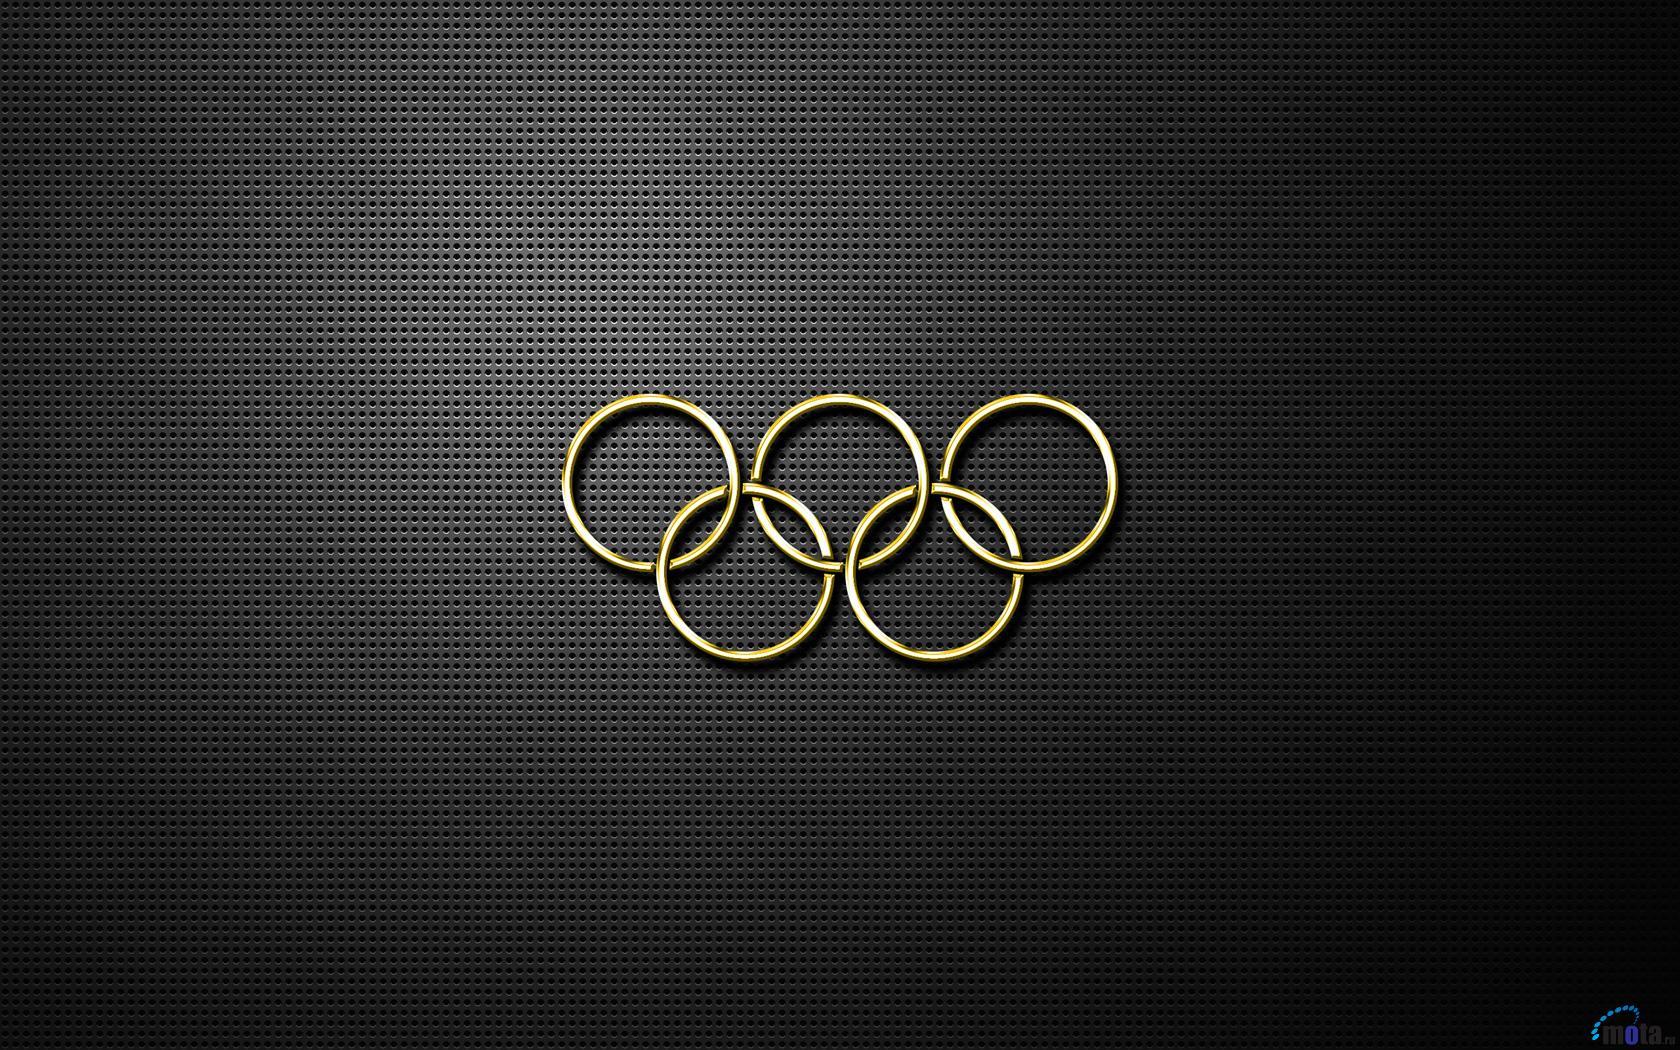 Olympic Rings wallpaper. Olympic Rings